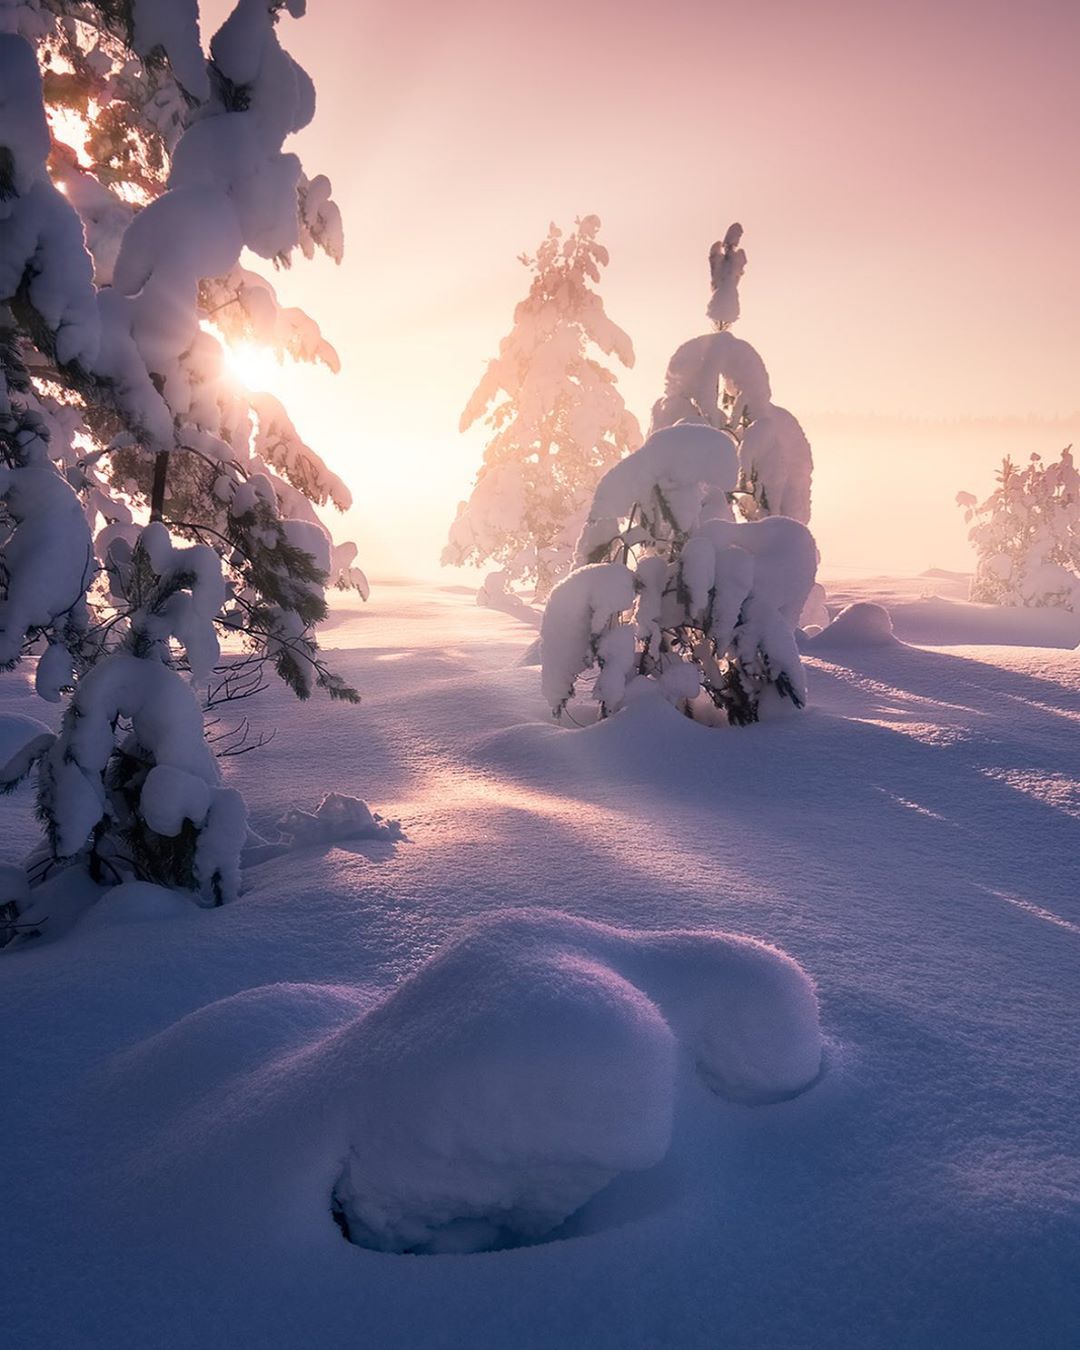 Сказочные пейзажи Норвегии от Ханса Гуннара Аслаксена